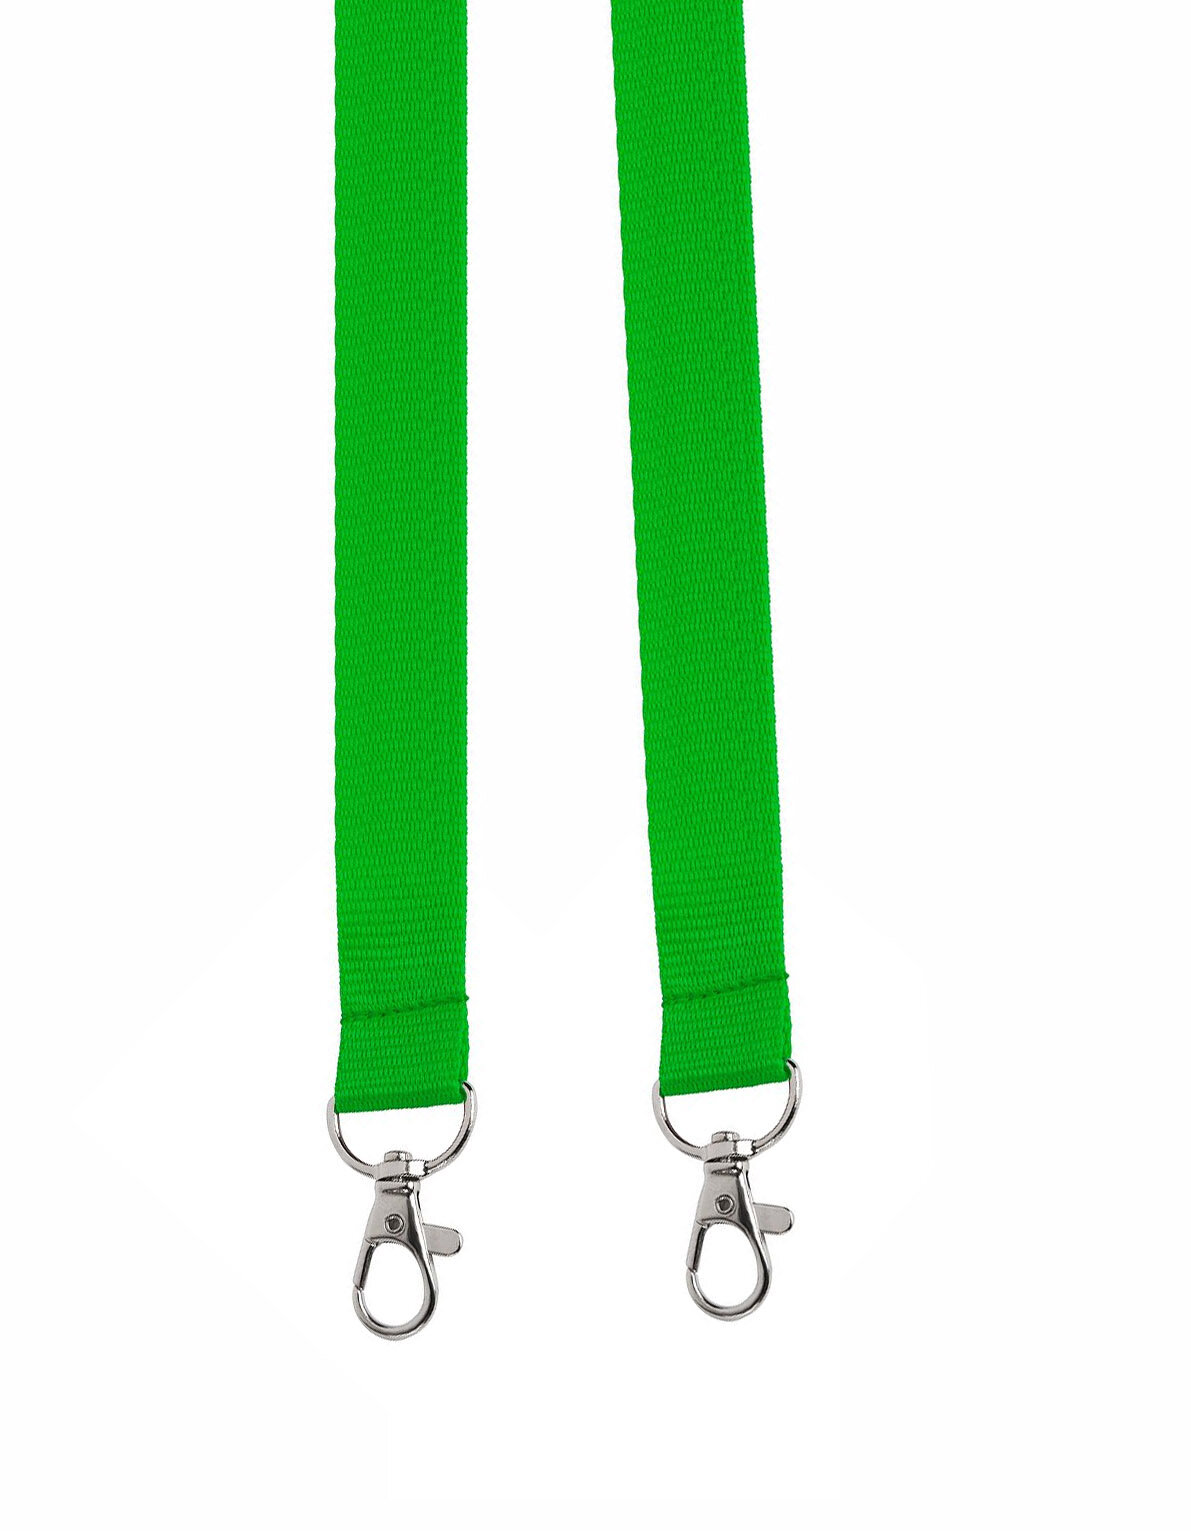 Ланъярд (шнурок) для бейджа с 2 карабинами 15 мм, 1 шт, зеленый